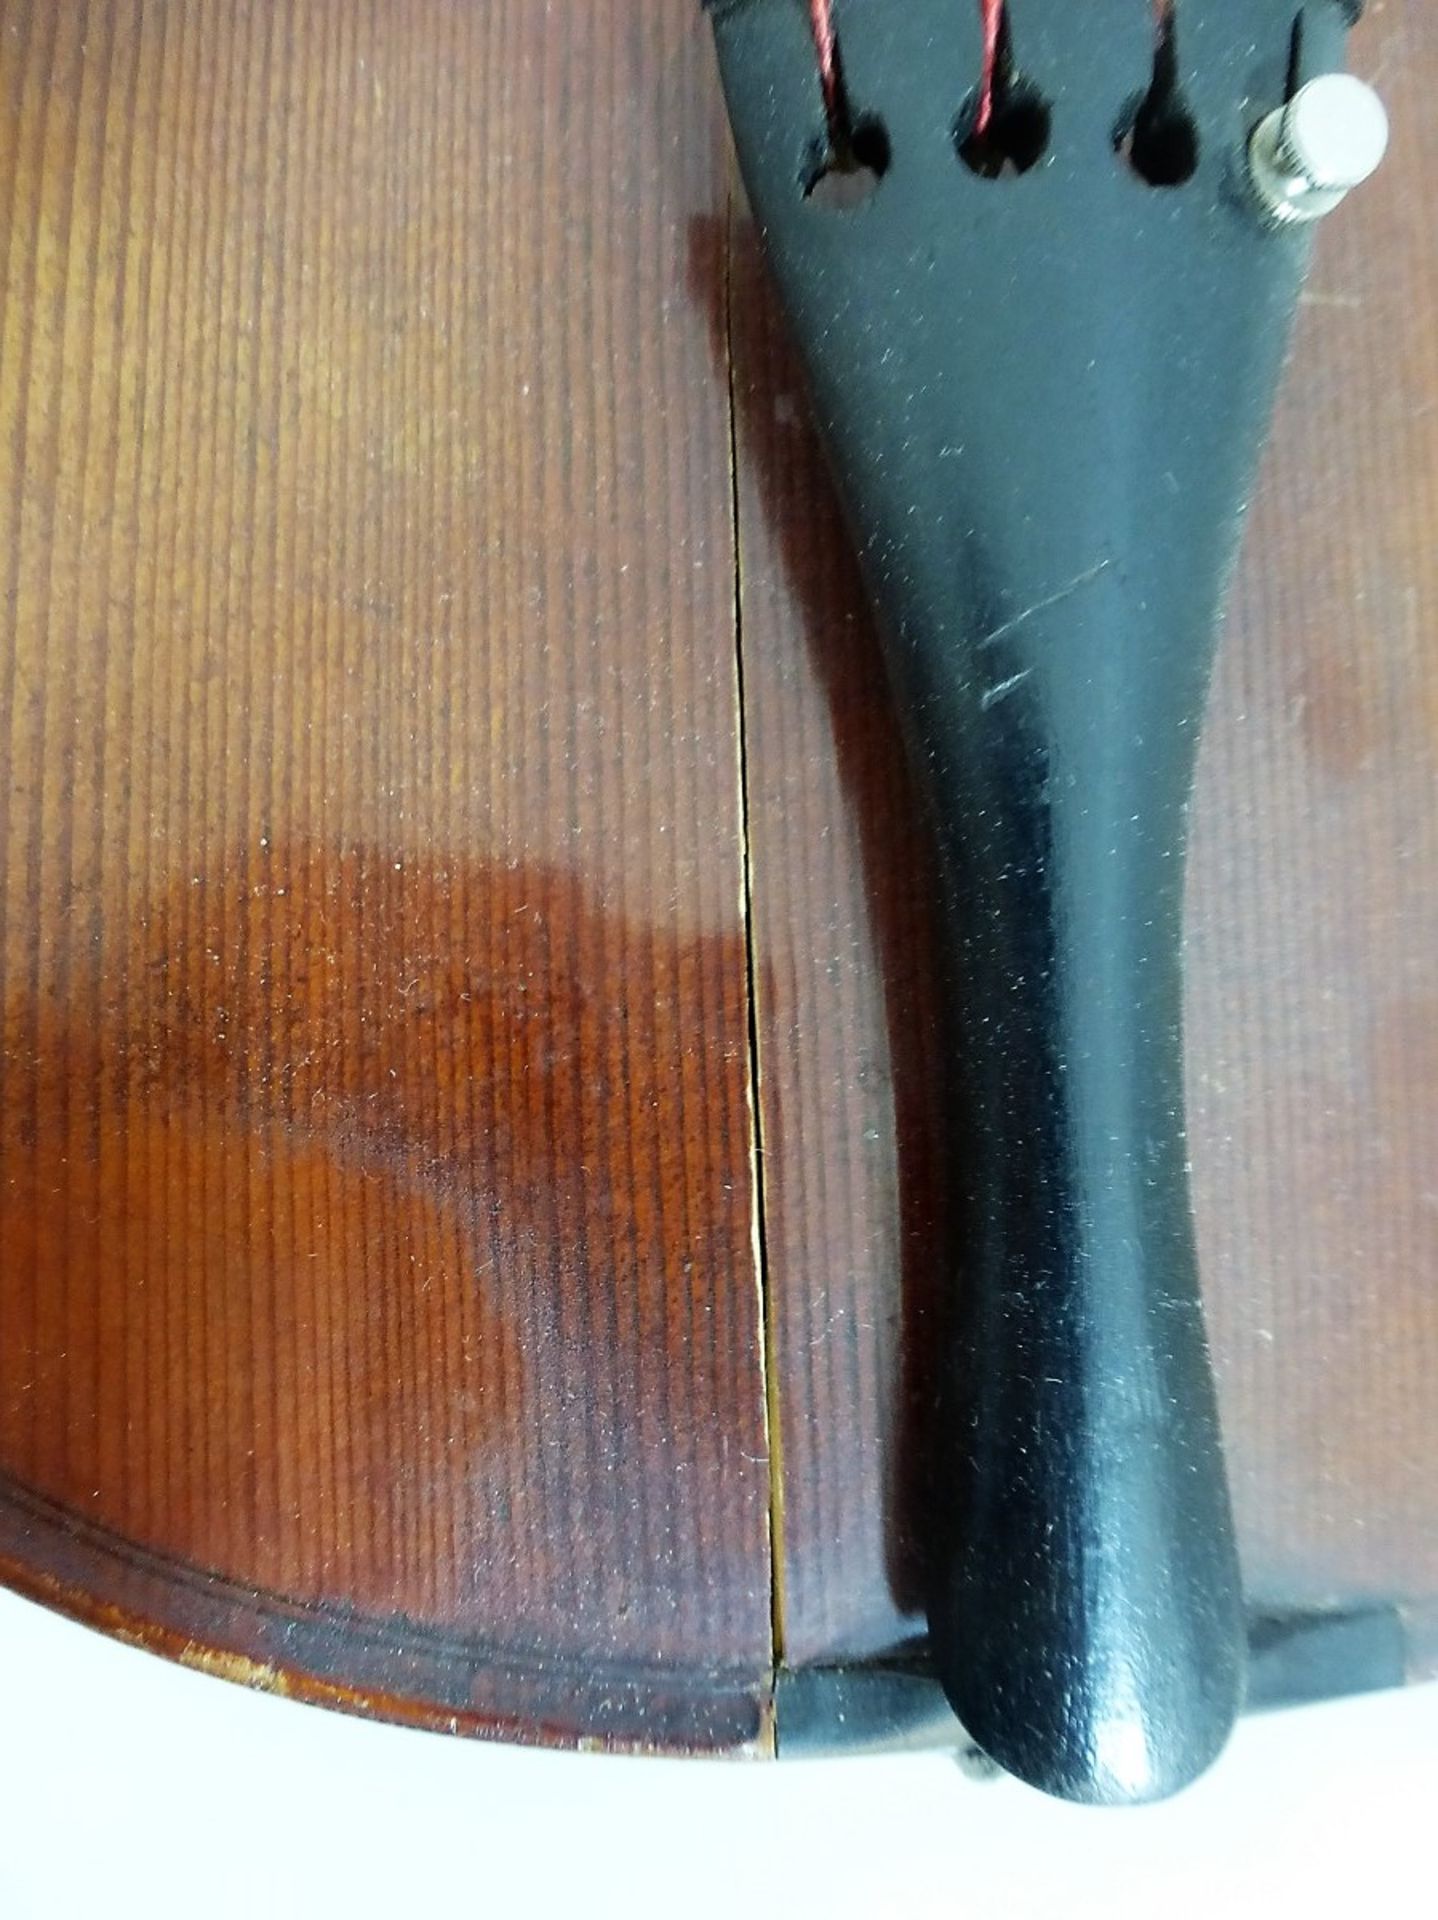 Geige um 1900, innen bez. Alexander Gagliano - Stradivarius Fecit Neapoli Anno 1715, - Bild 2 aus 2